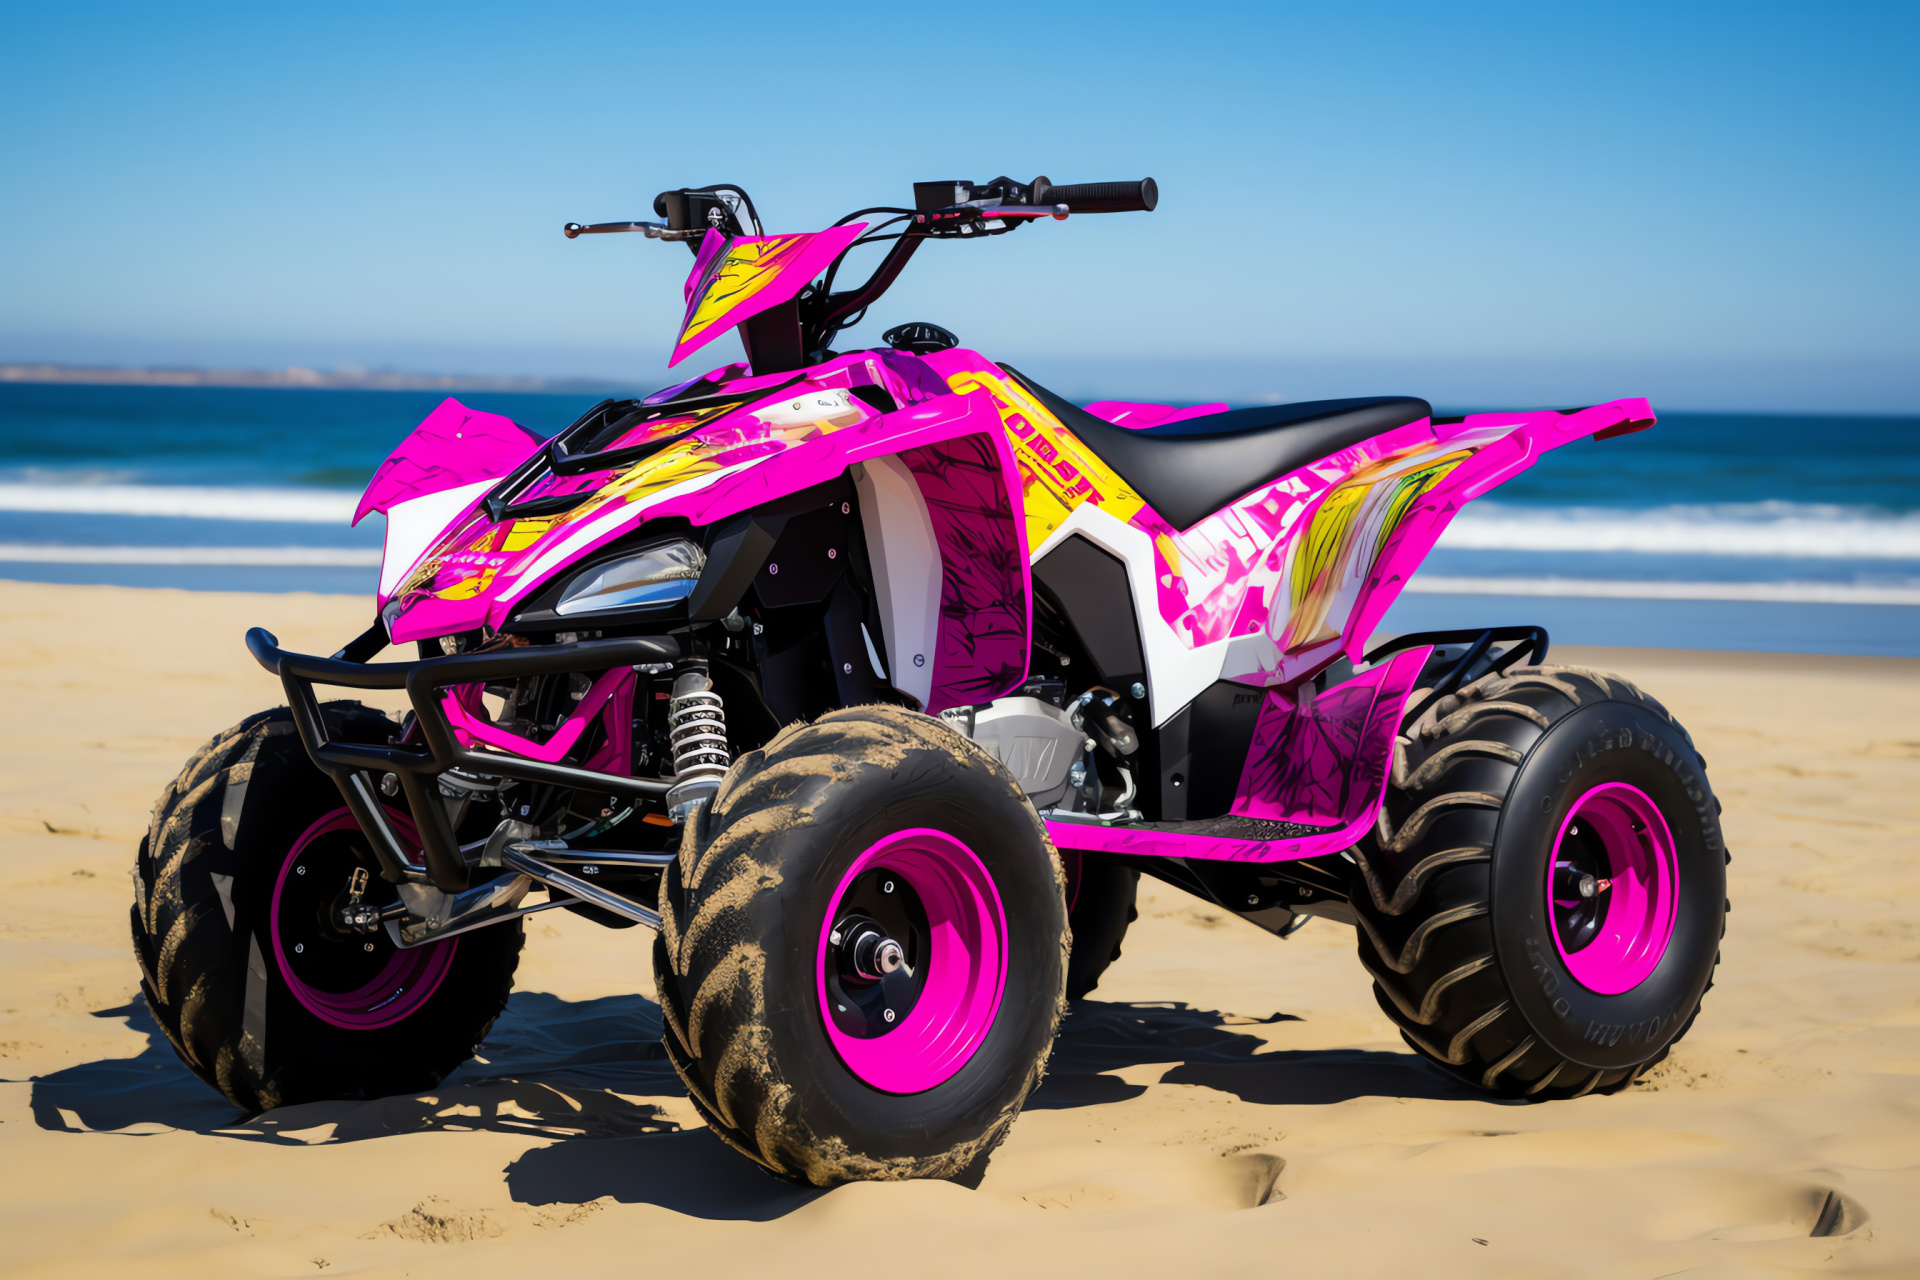 Raptor 700SE ATV, Coastal Dunes, Bright Neon Graphic, Recreational Vehicle, Seaside Off-Roading, HD Desktop Image